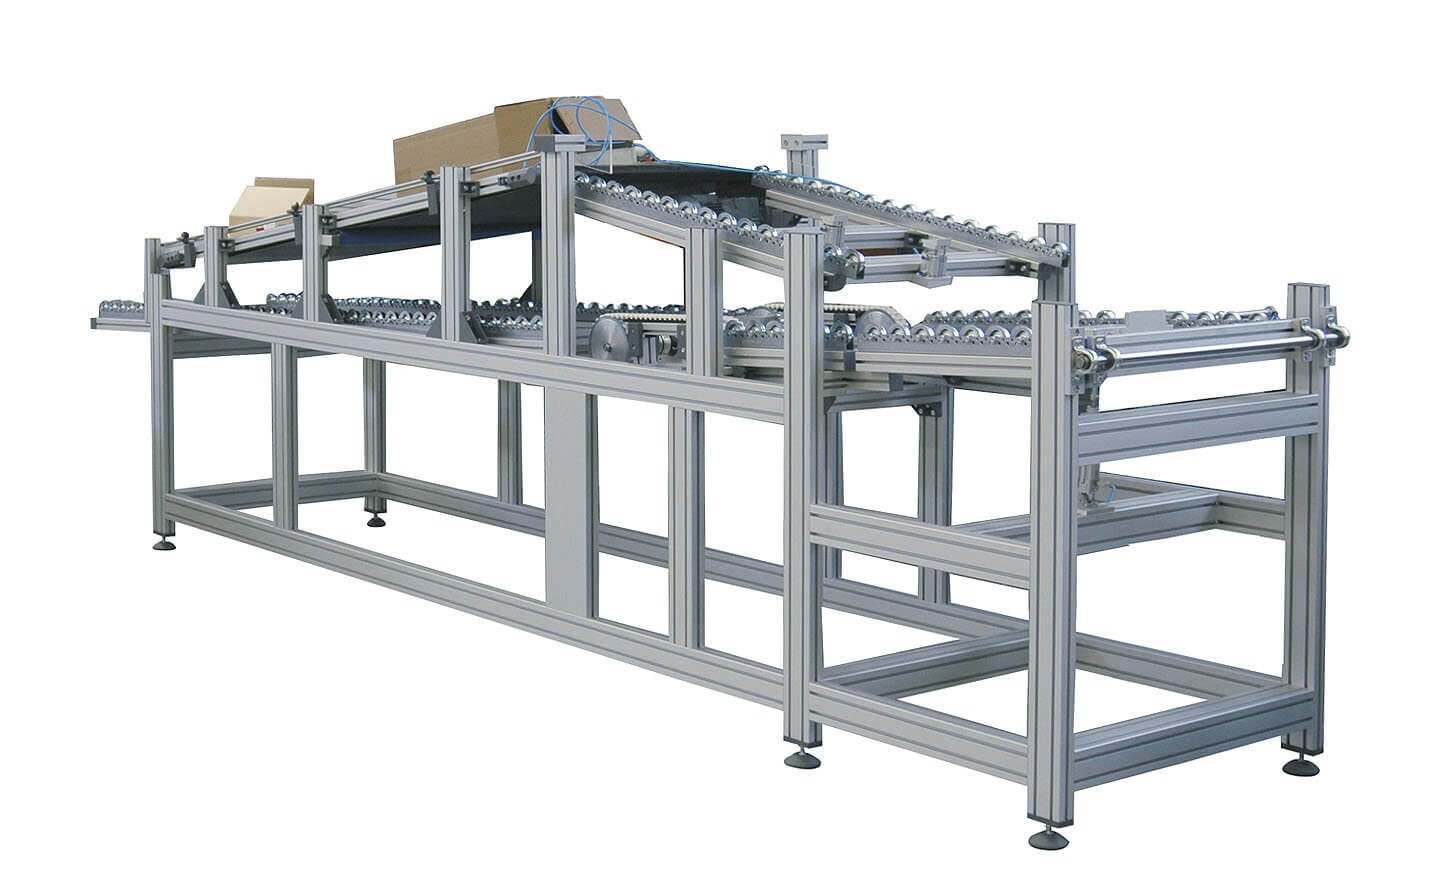 Roller conveyor system - non-driven roller conveyors